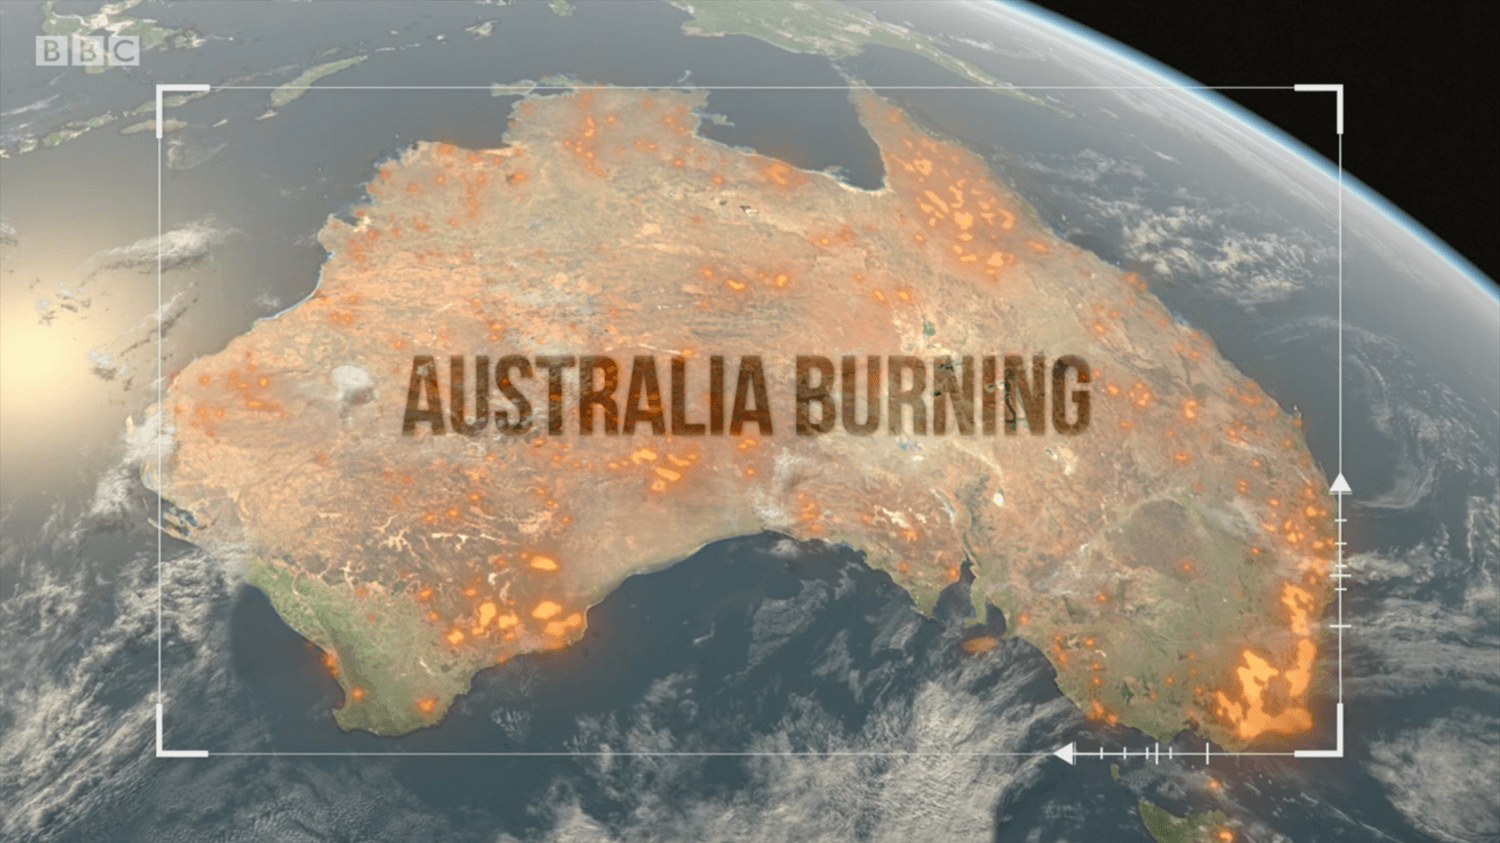 BBC Panorama: Australia Burning